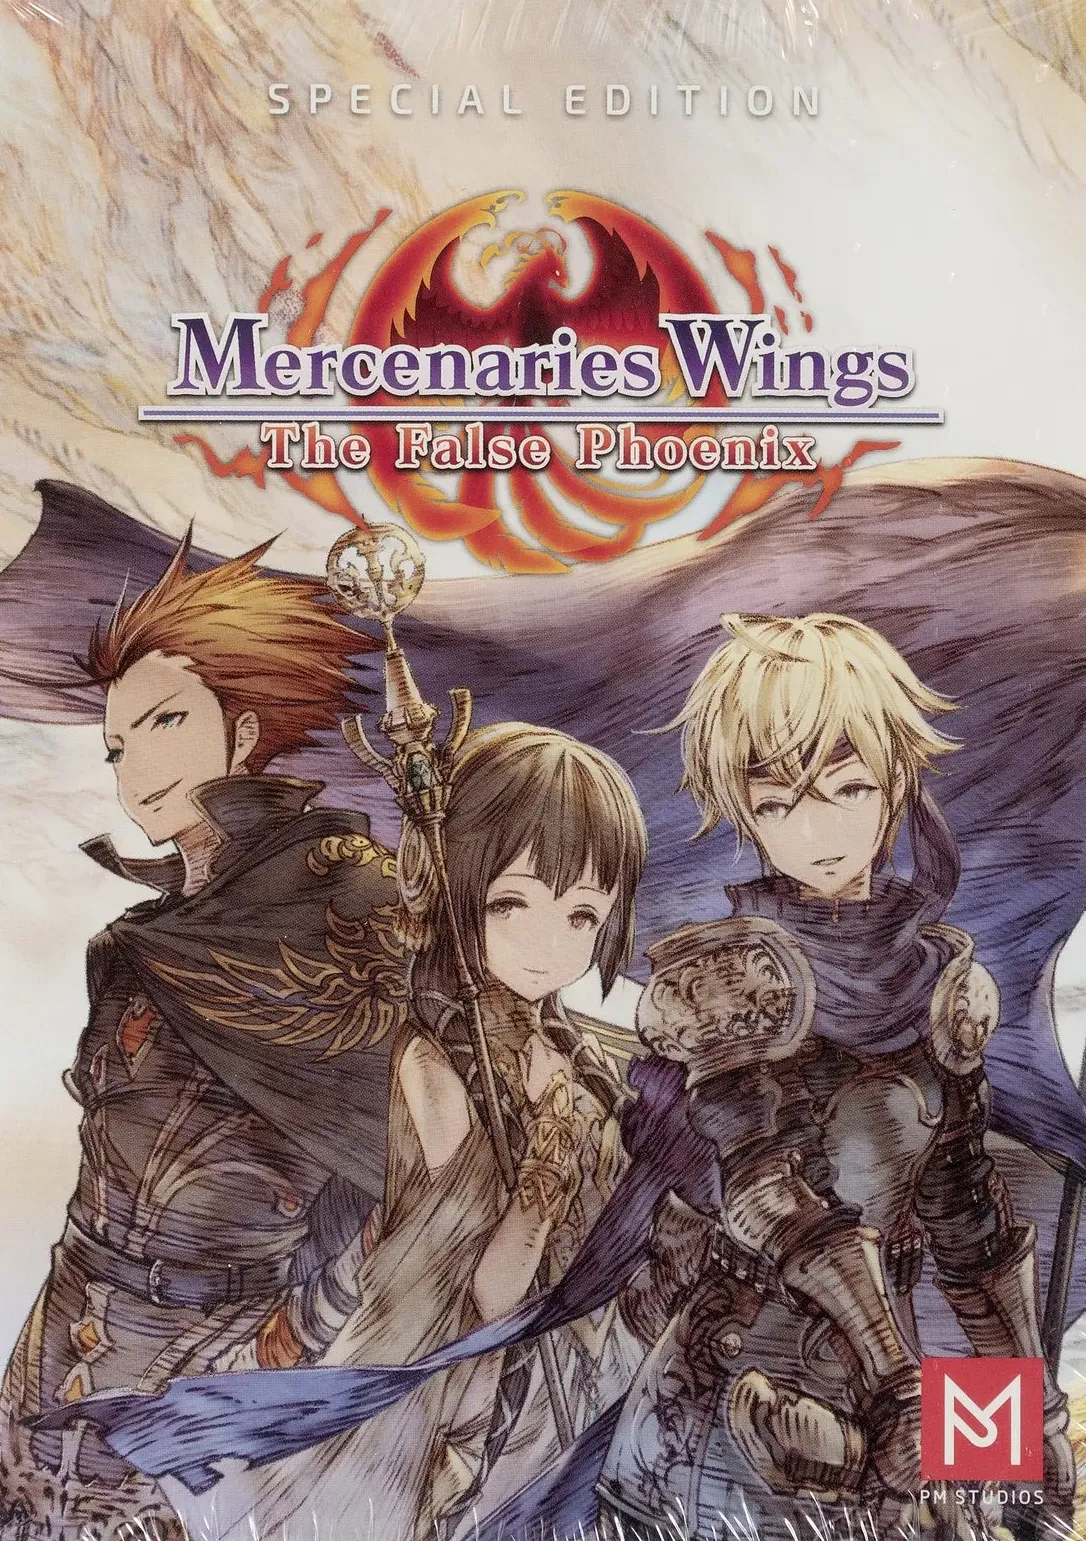 Mercenaries Wings: The False Phoenix [Special Edition] Video Game